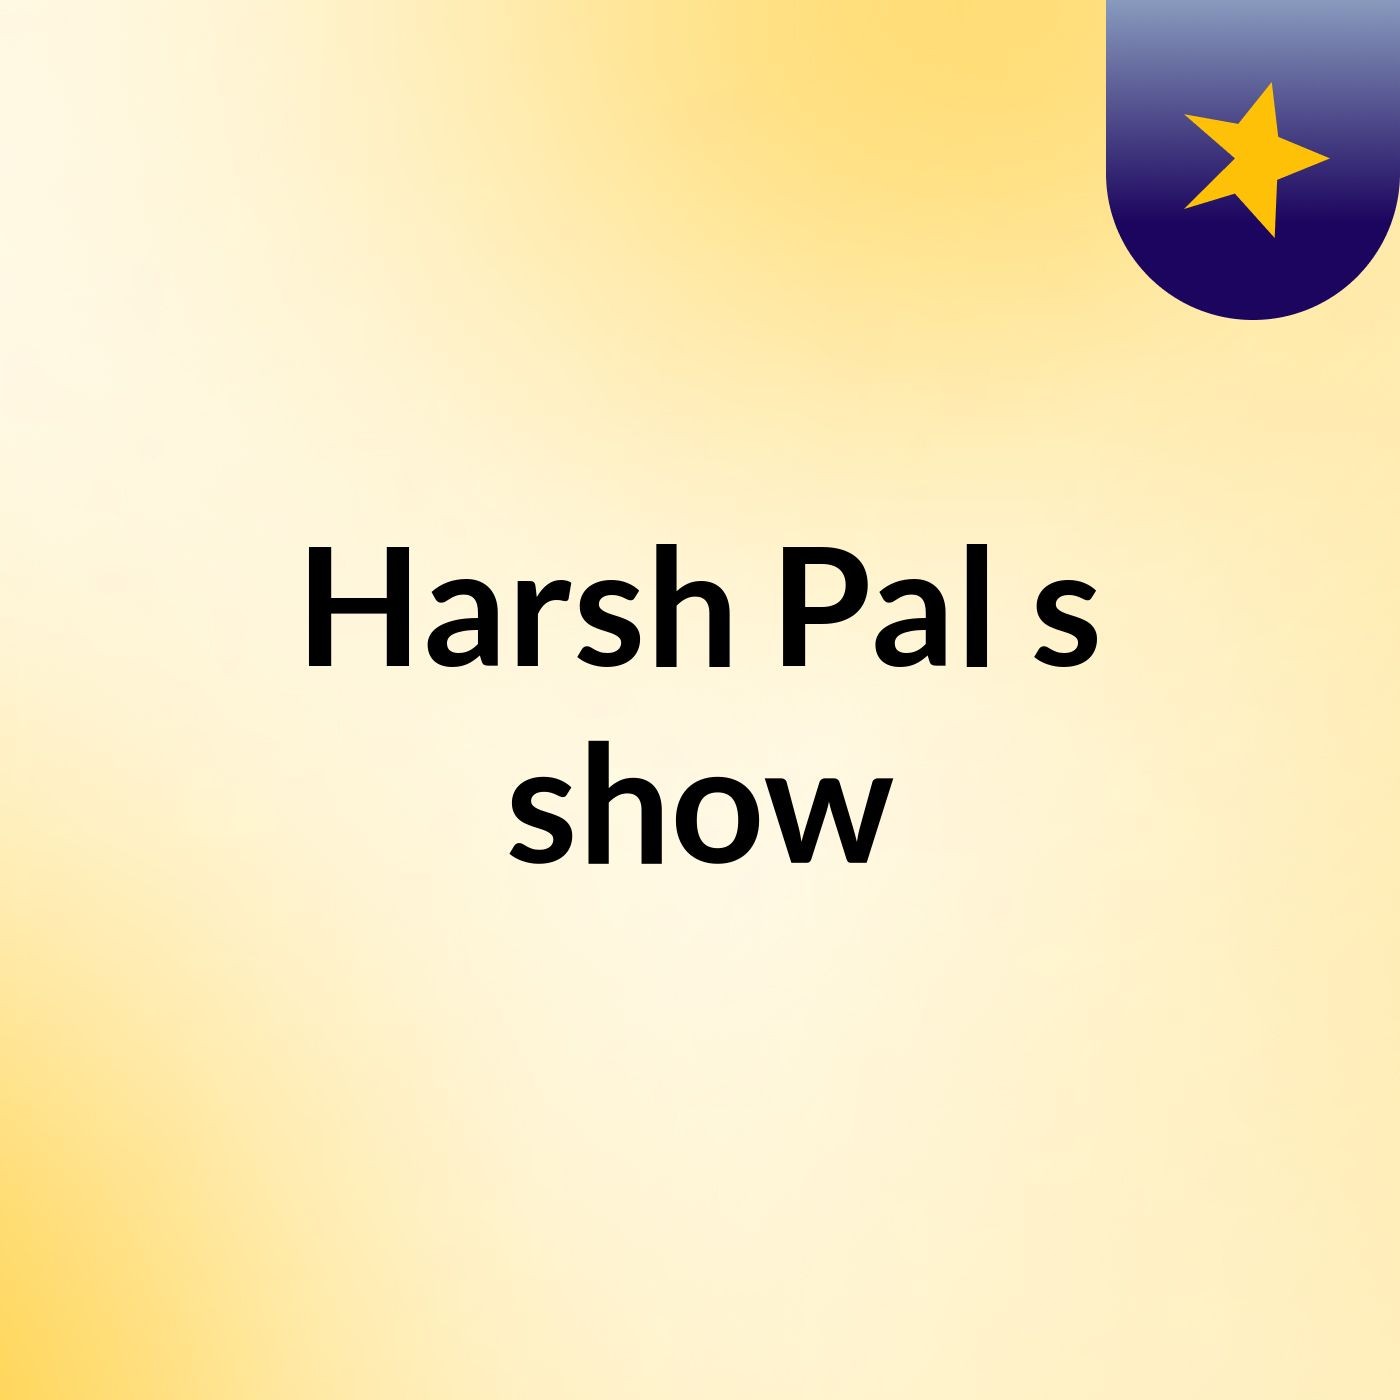 Harsh Pal's show